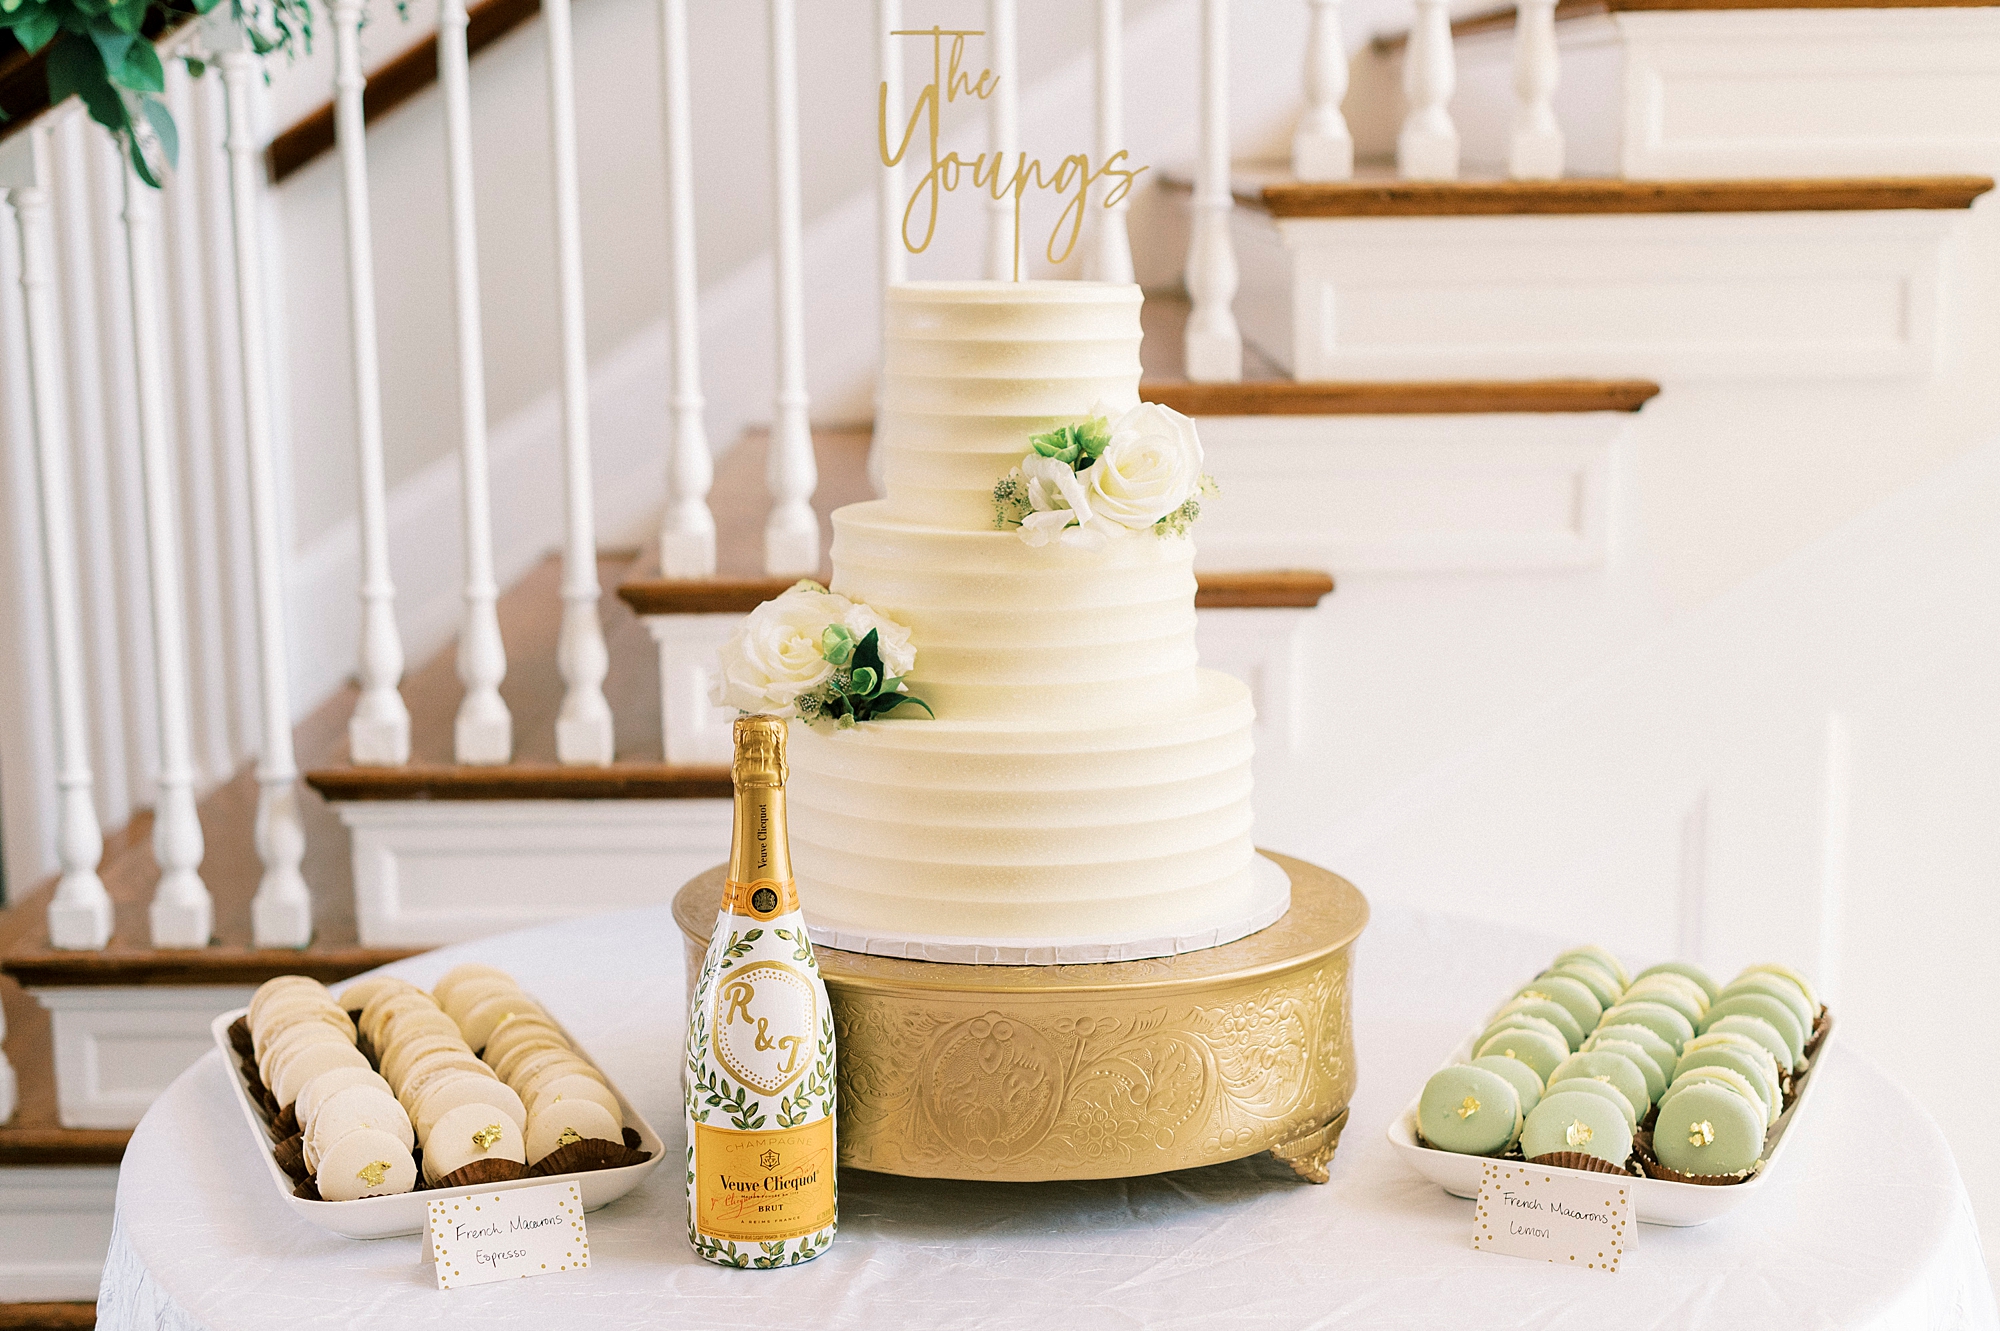 tiered wedding cake with ivory icing on gold platform inside Separk Mansion